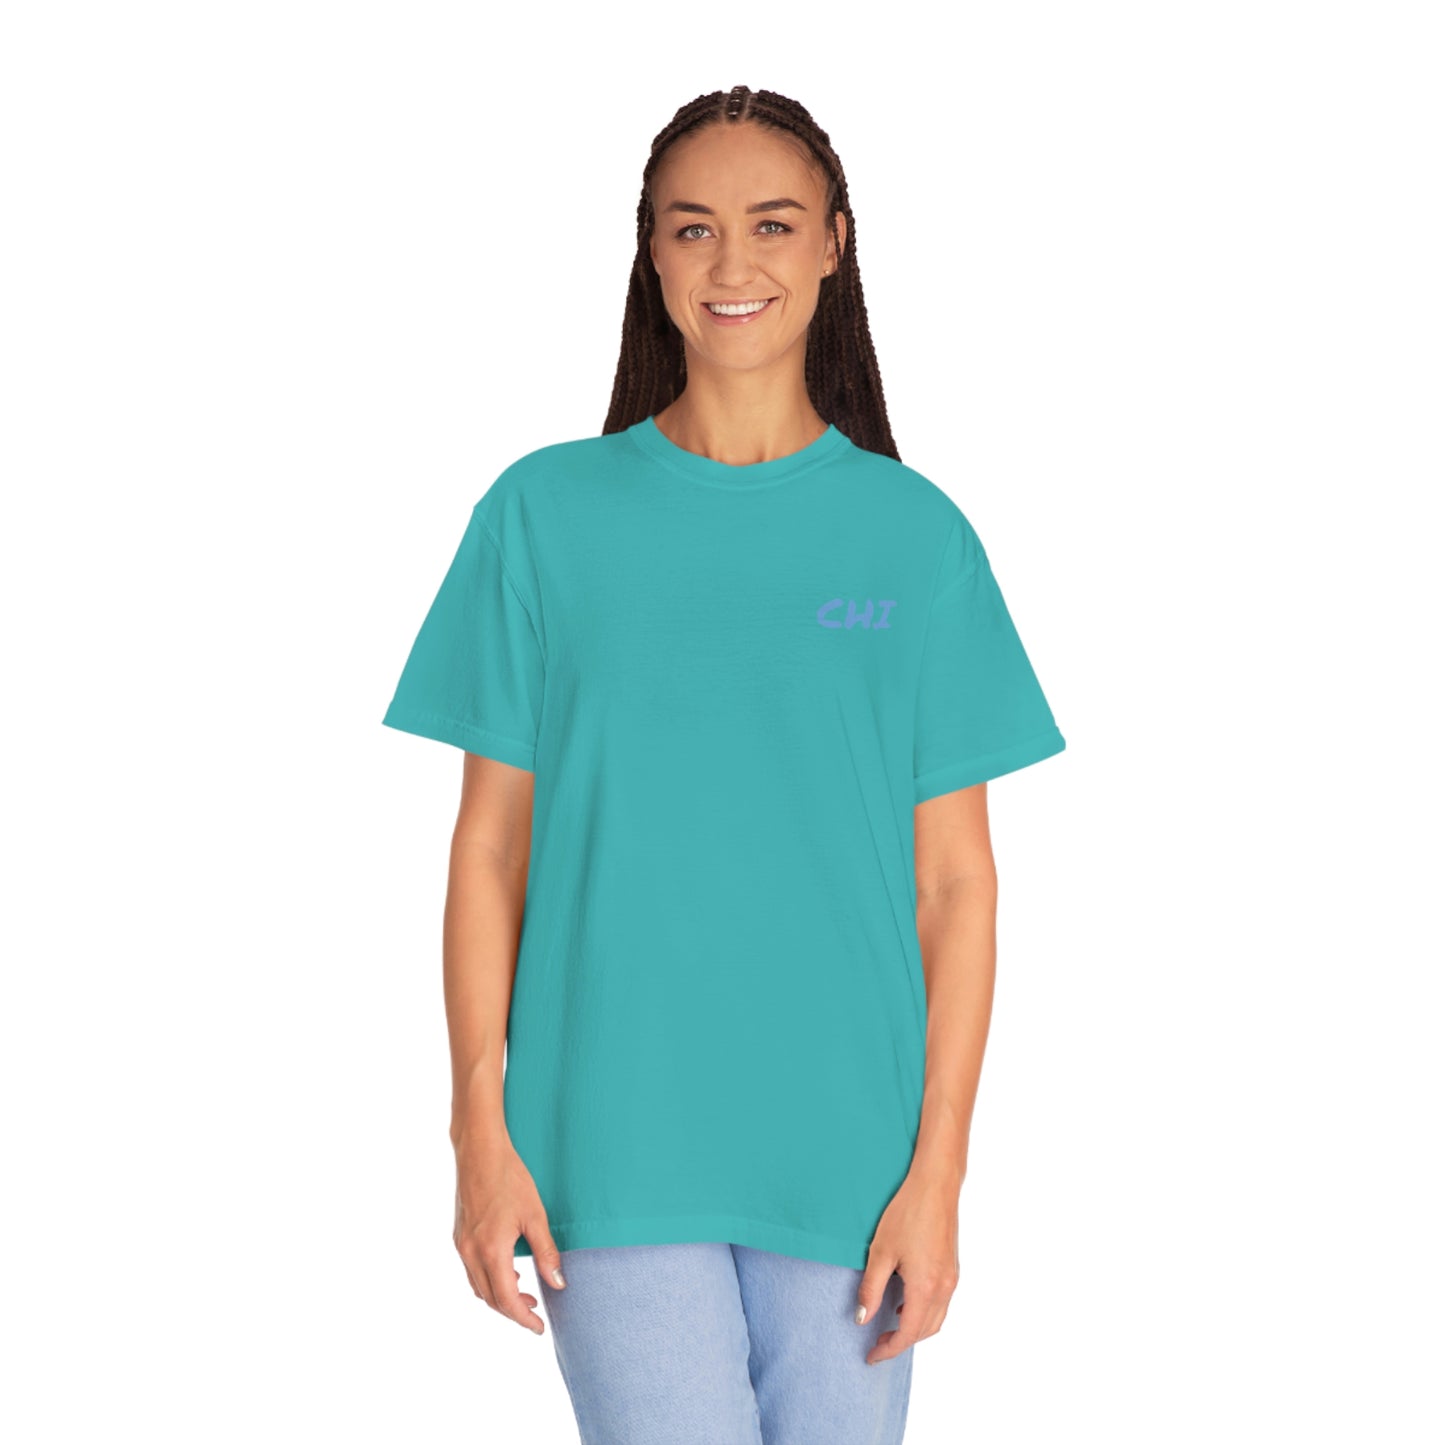 Official Swilson "CHI" T-Shirt (Comfort Colors)